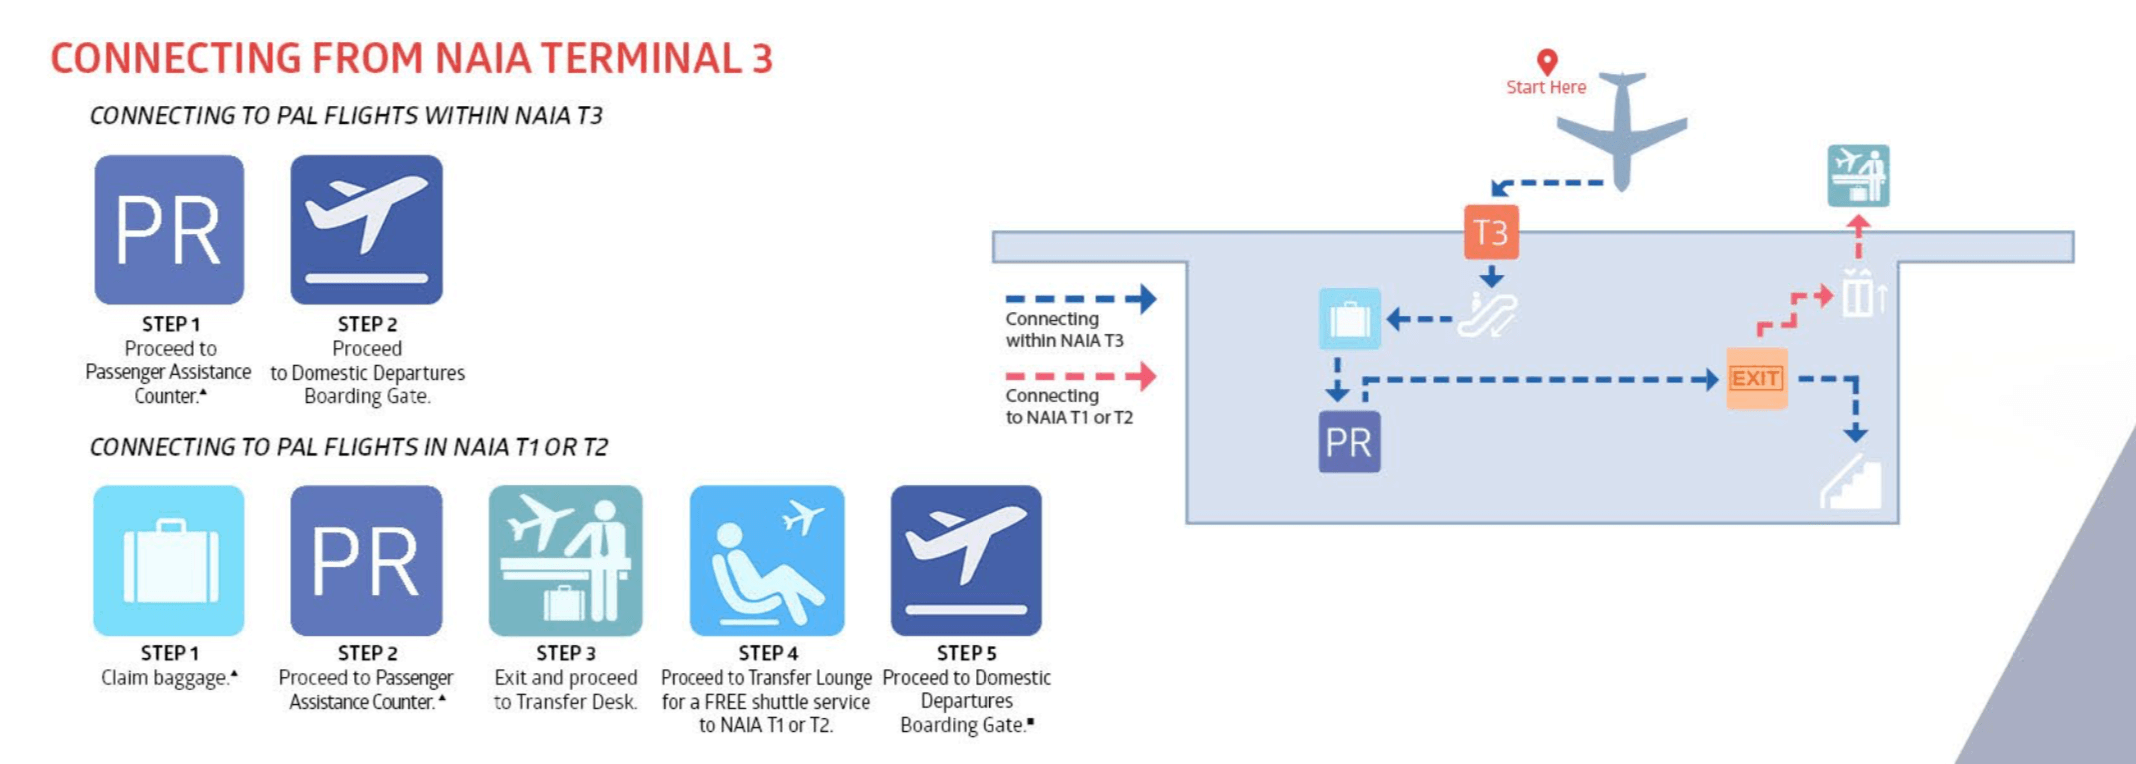 Anschluss vom NAIA Terminal 3